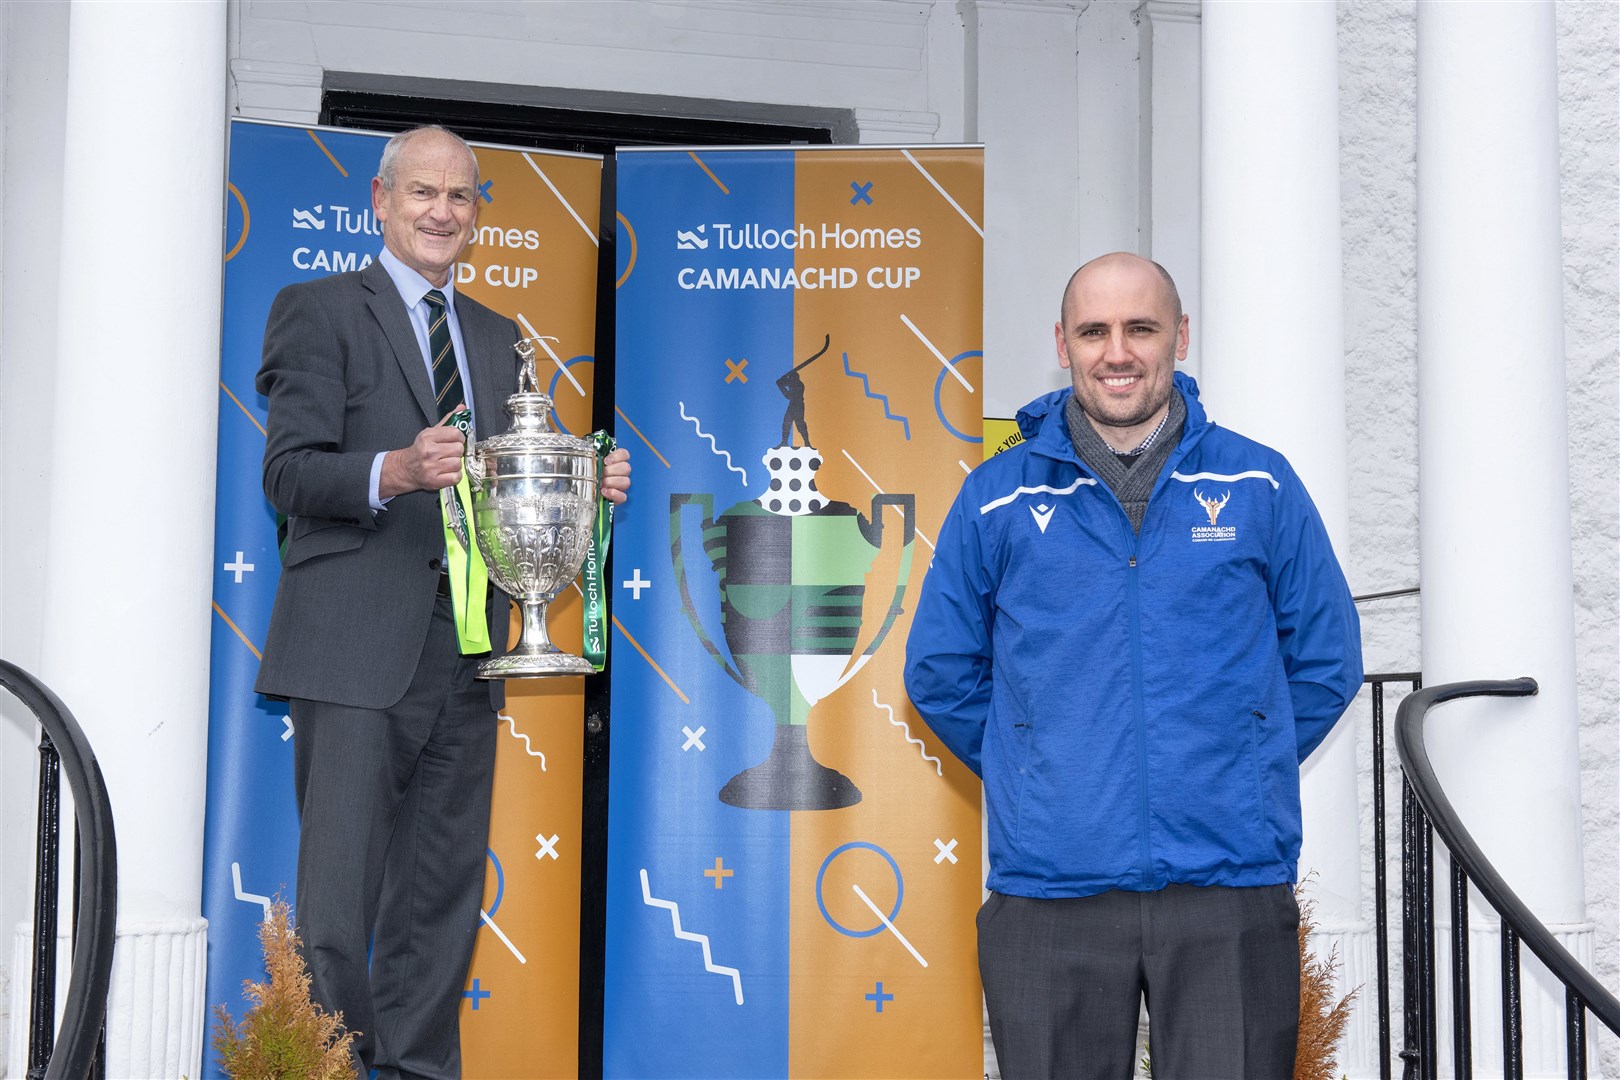 George Fraser (left), former Newtonmore player & Tulloch Homes CEO holds the Tulloch Homes Camanachd Cup alongside Camanachd Association CEO, Derek Keir.